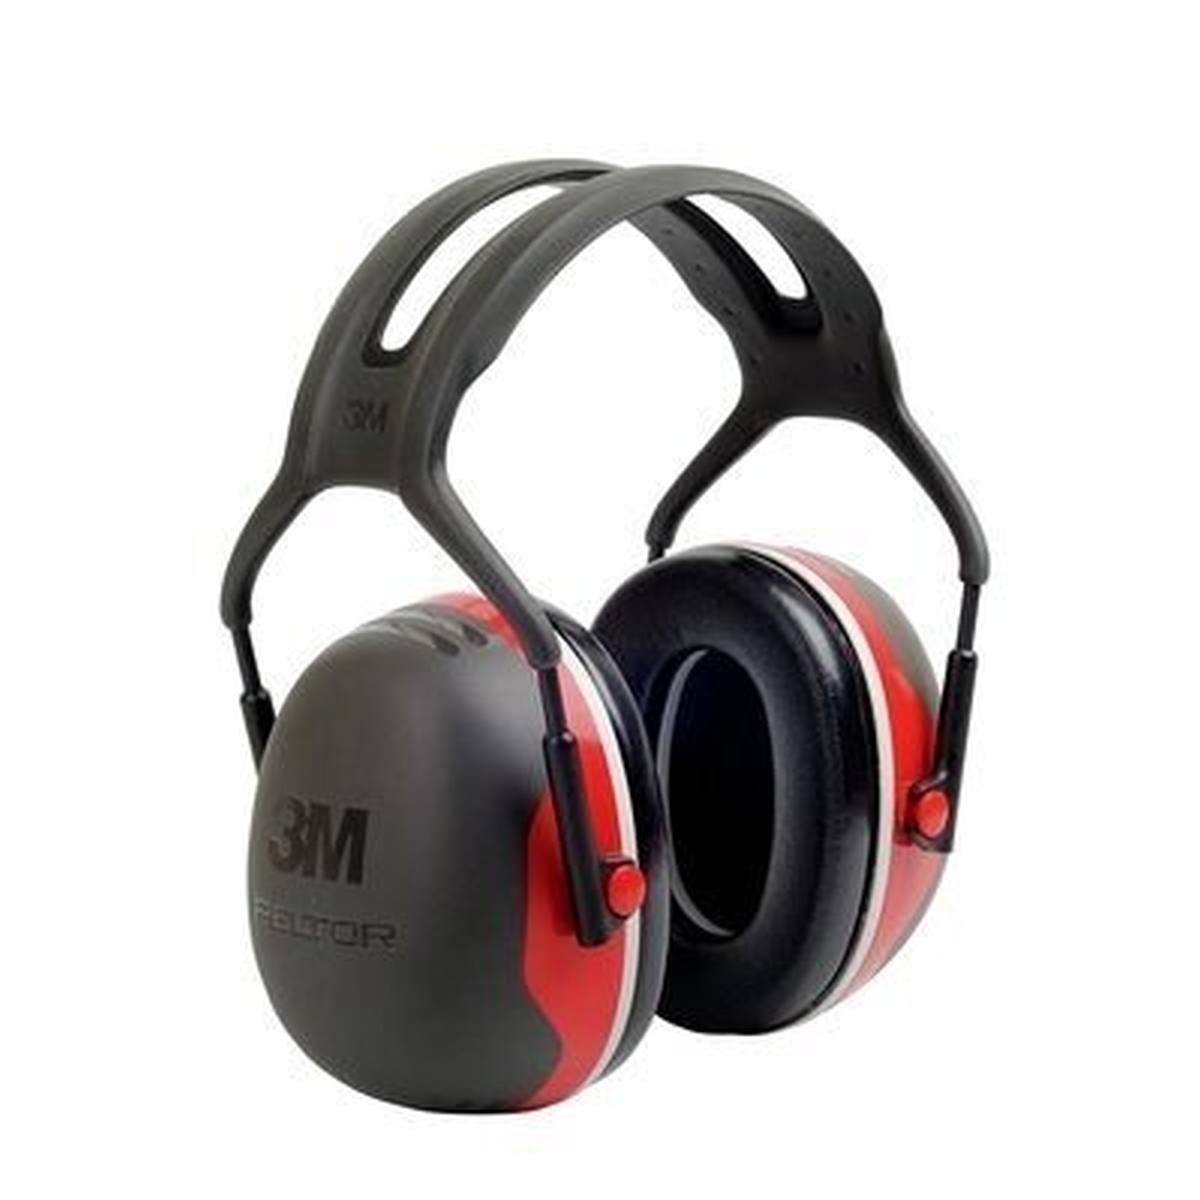 3M PELTOR Ear muffs, X3A headband, red, SNR=33 dB